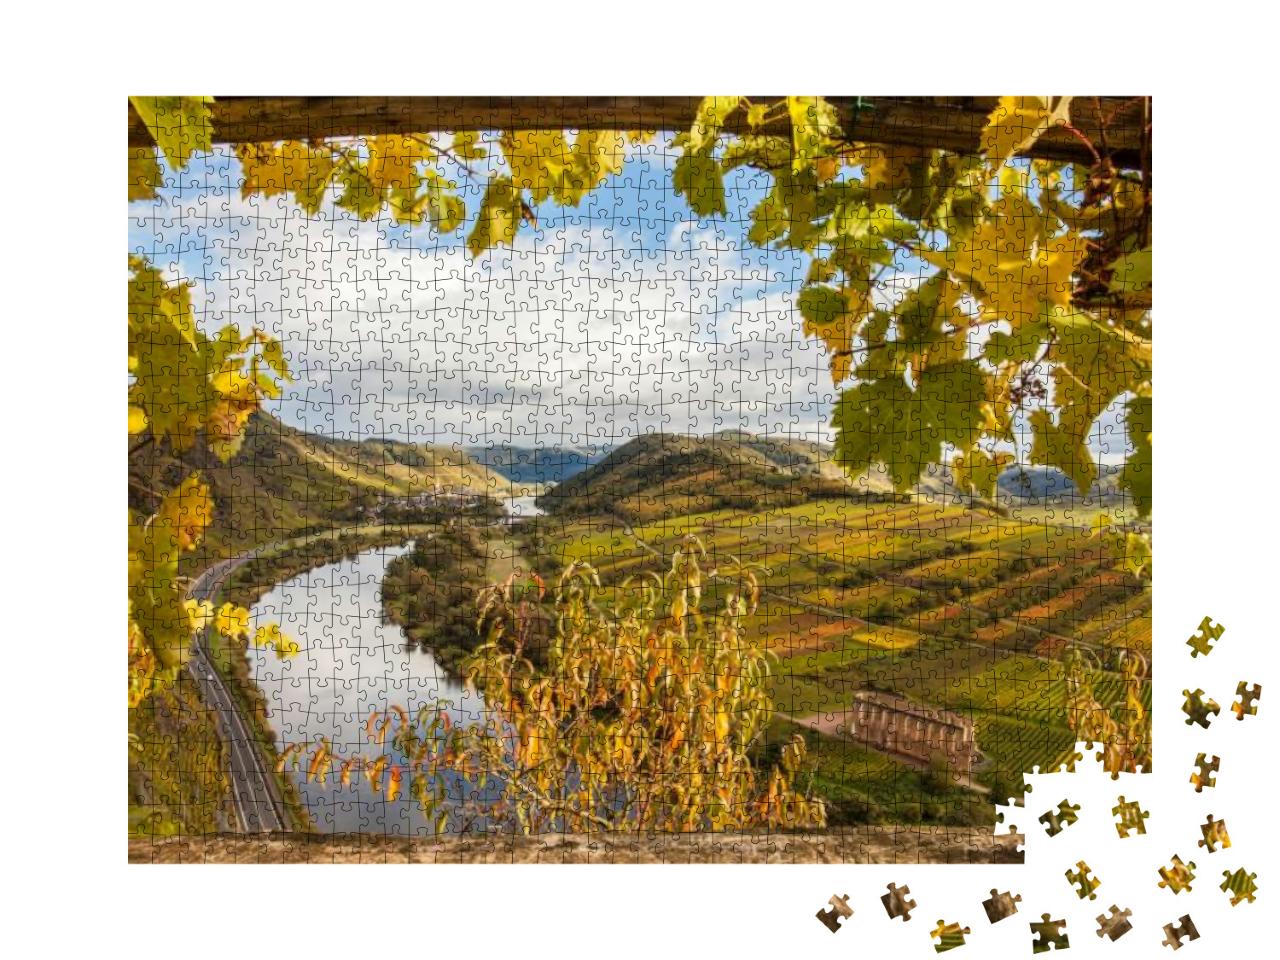 Moselle Autumn Golden Vineyards Landscape Calmont Region... Jigsaw Puzzle with 1000 pieces